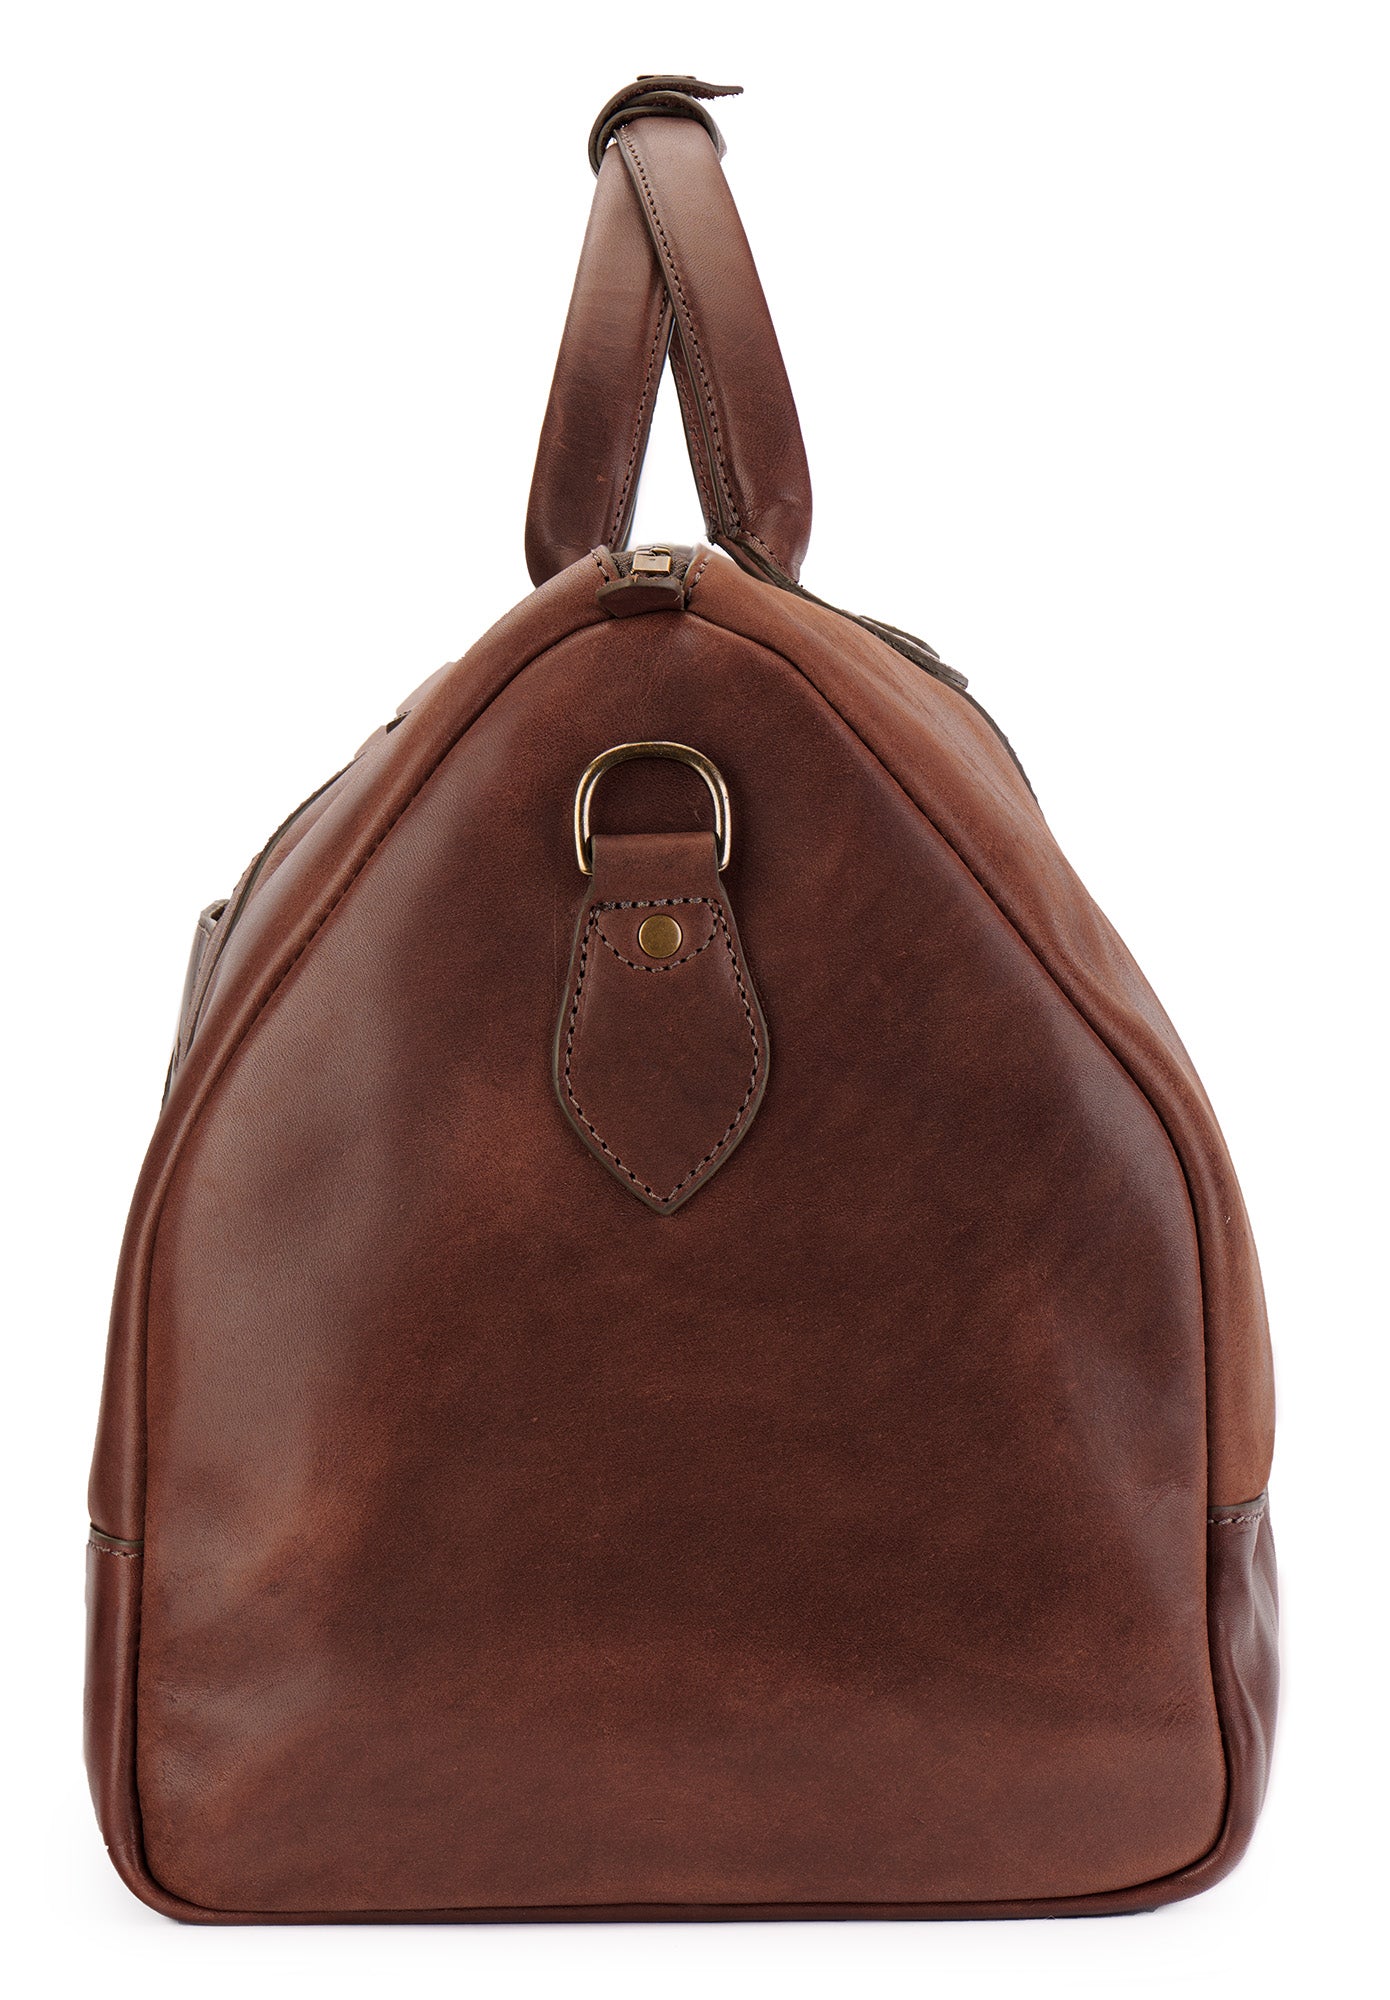 side of vintage brown leather duffle bag